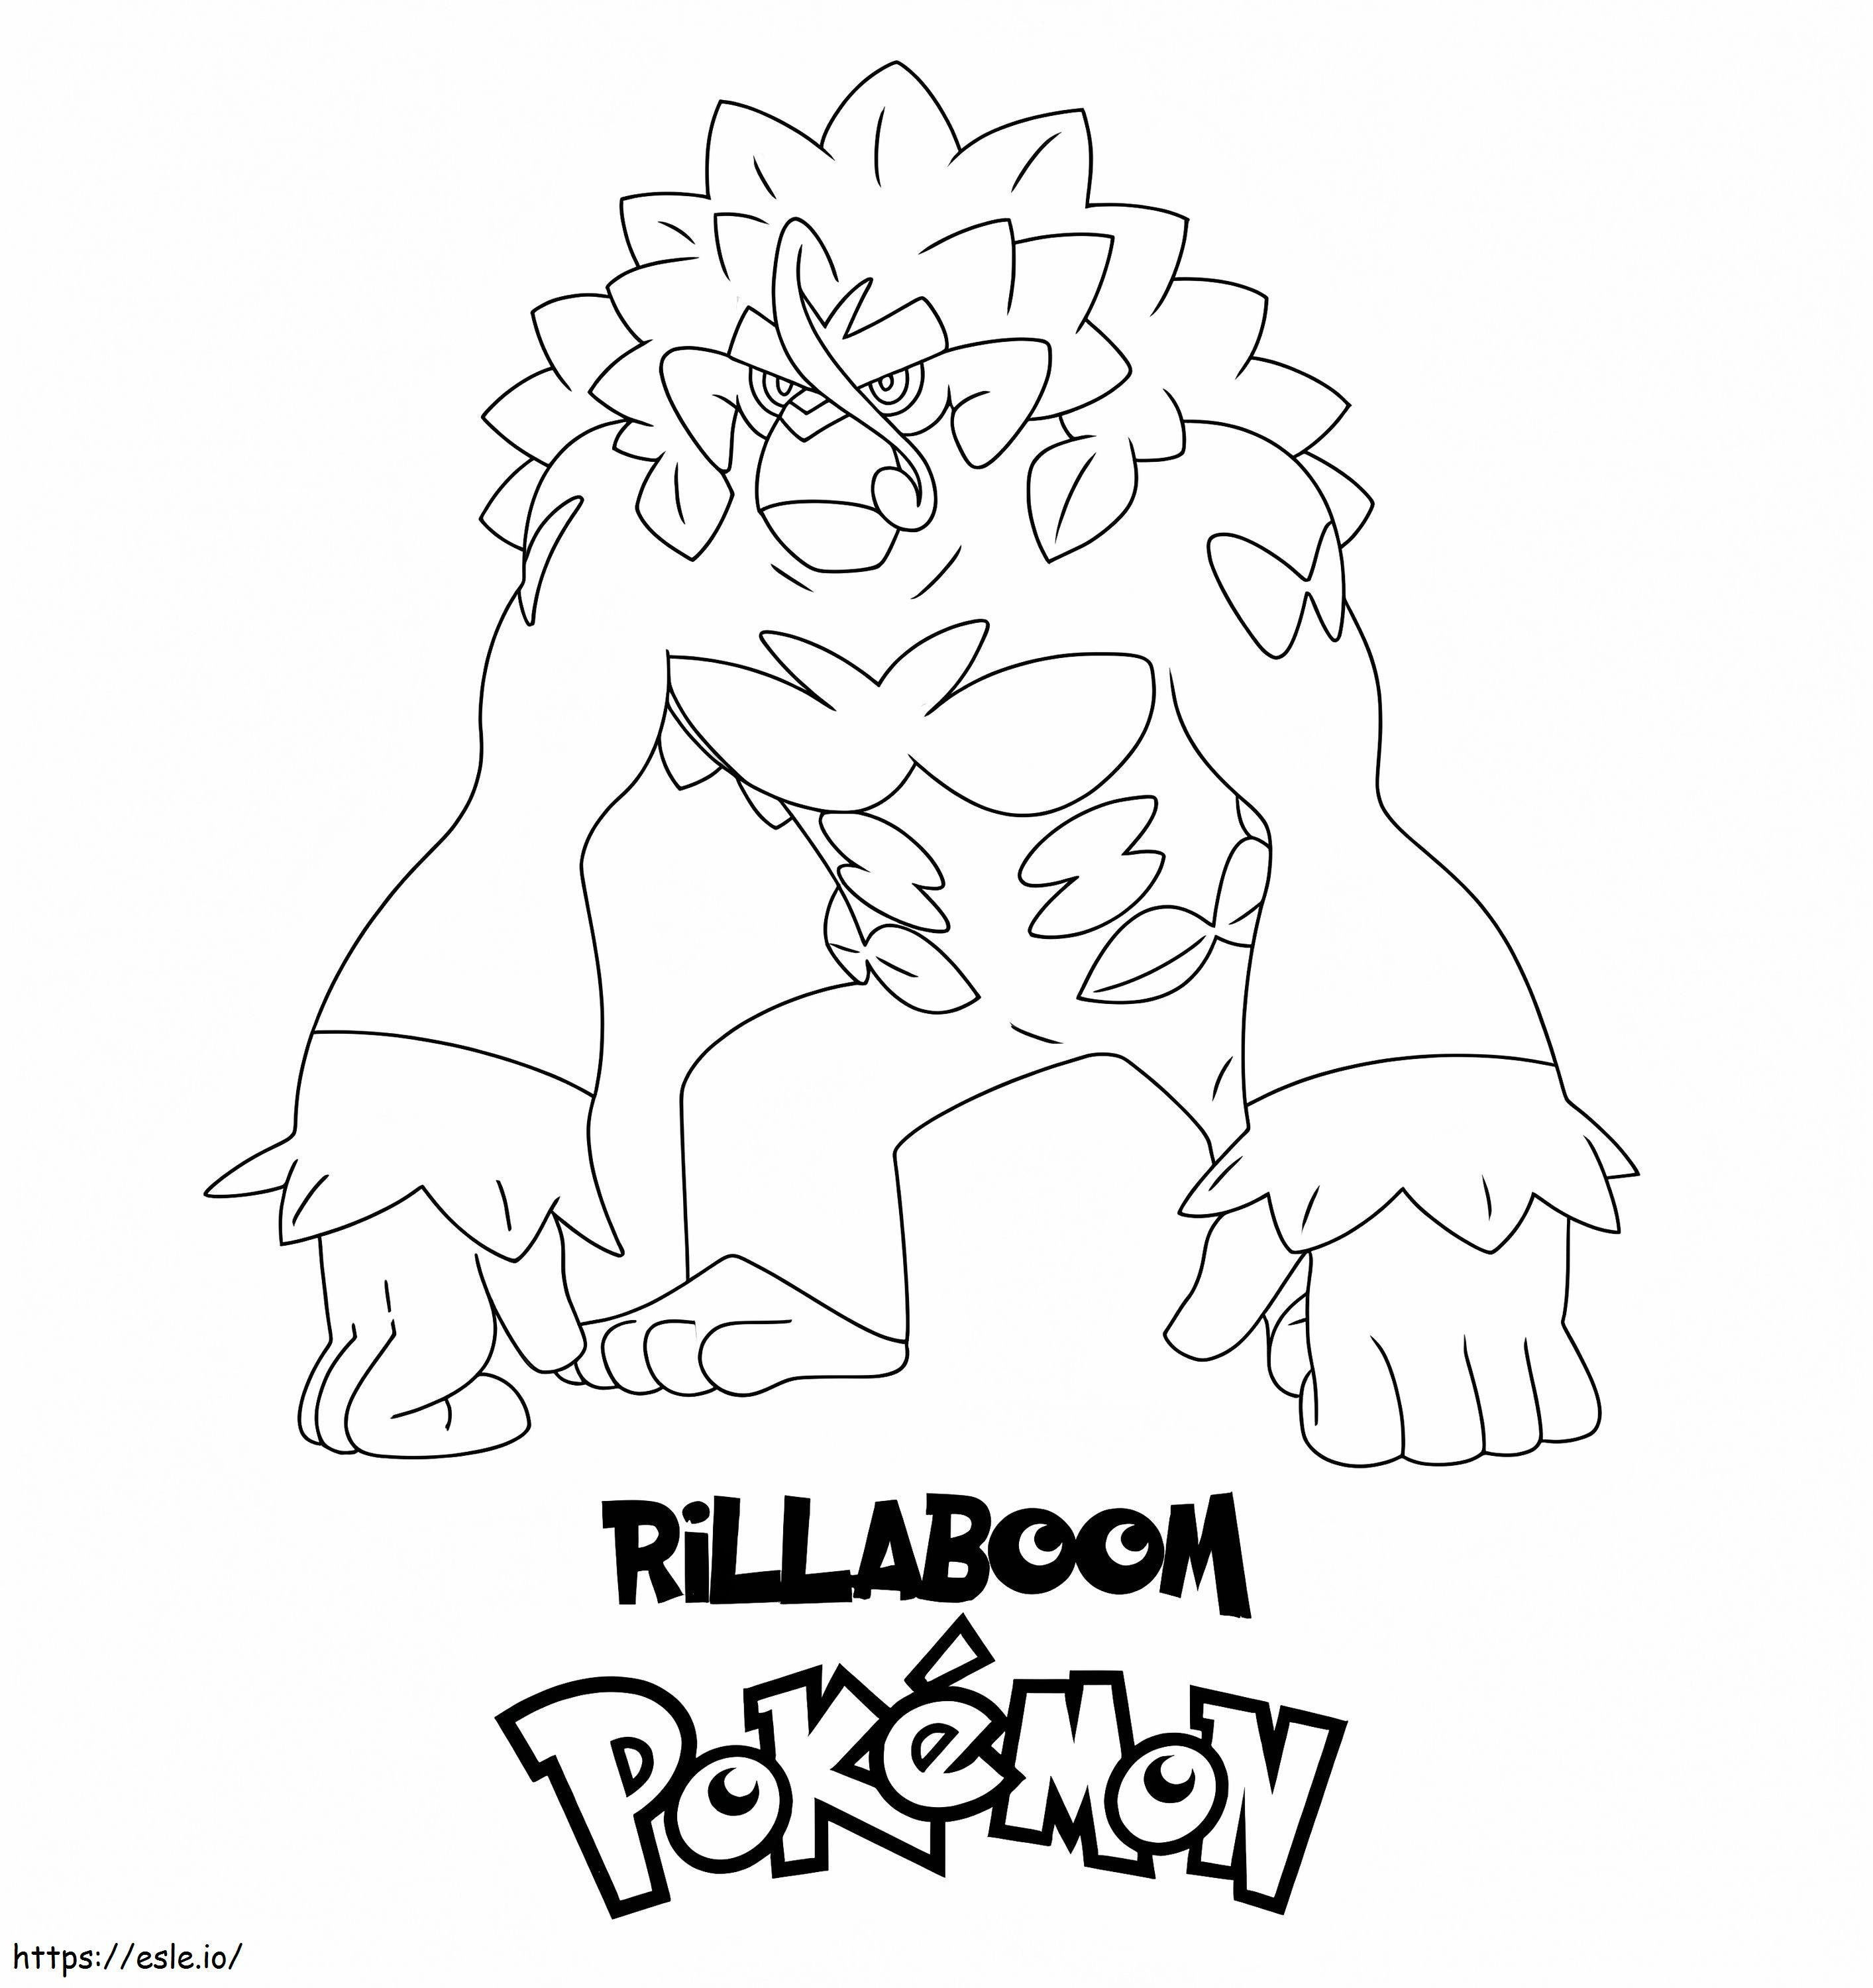 Rillaboom Pokémon 2 kleurplaat kleurplaat